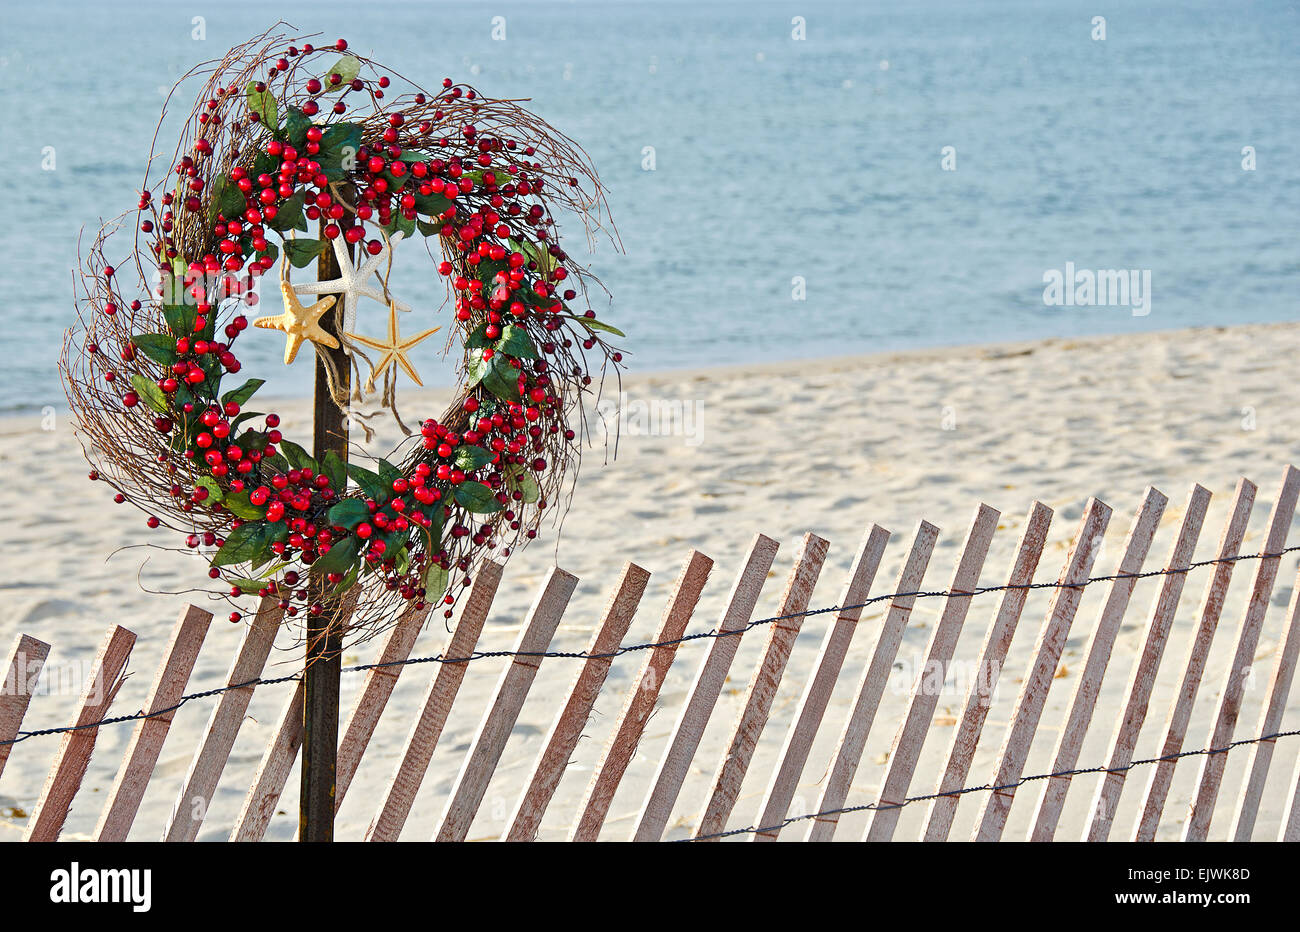 Christmas berry wreath on beach fence with starfish. Stock Photo